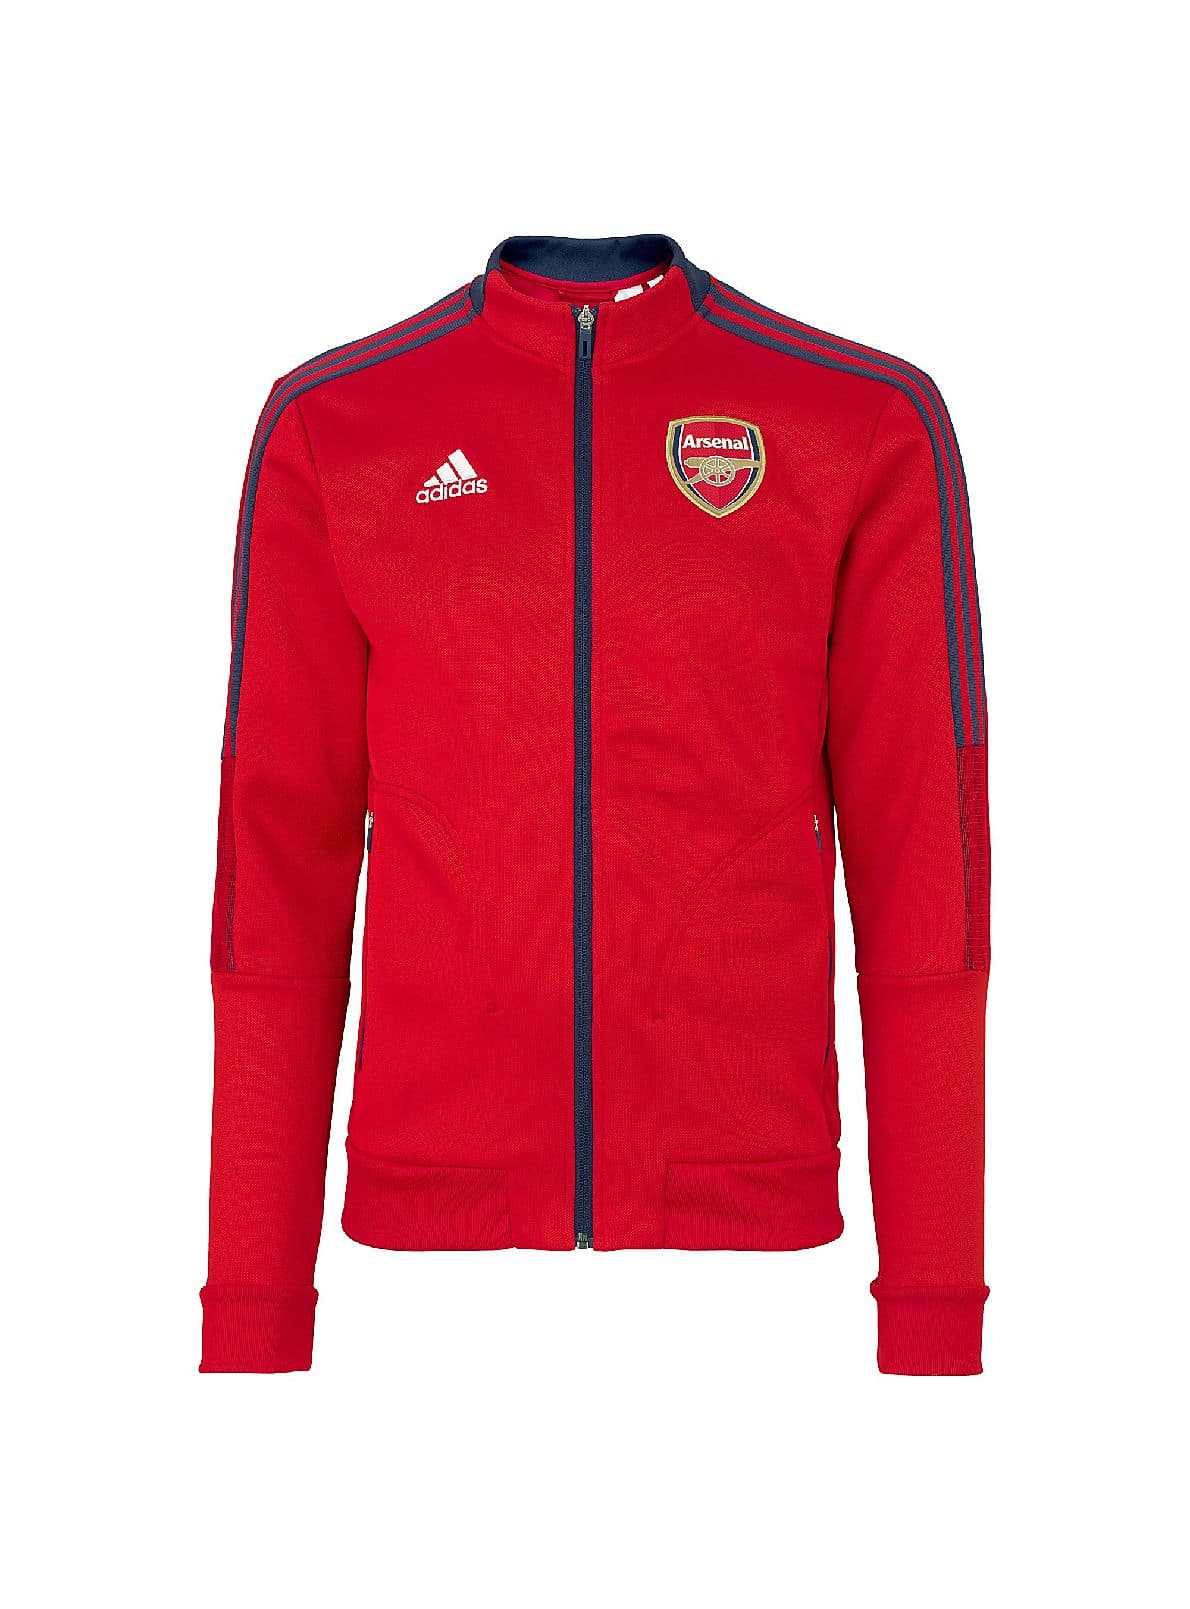 Arsenal gear 2021/22 - Anthem jersey red